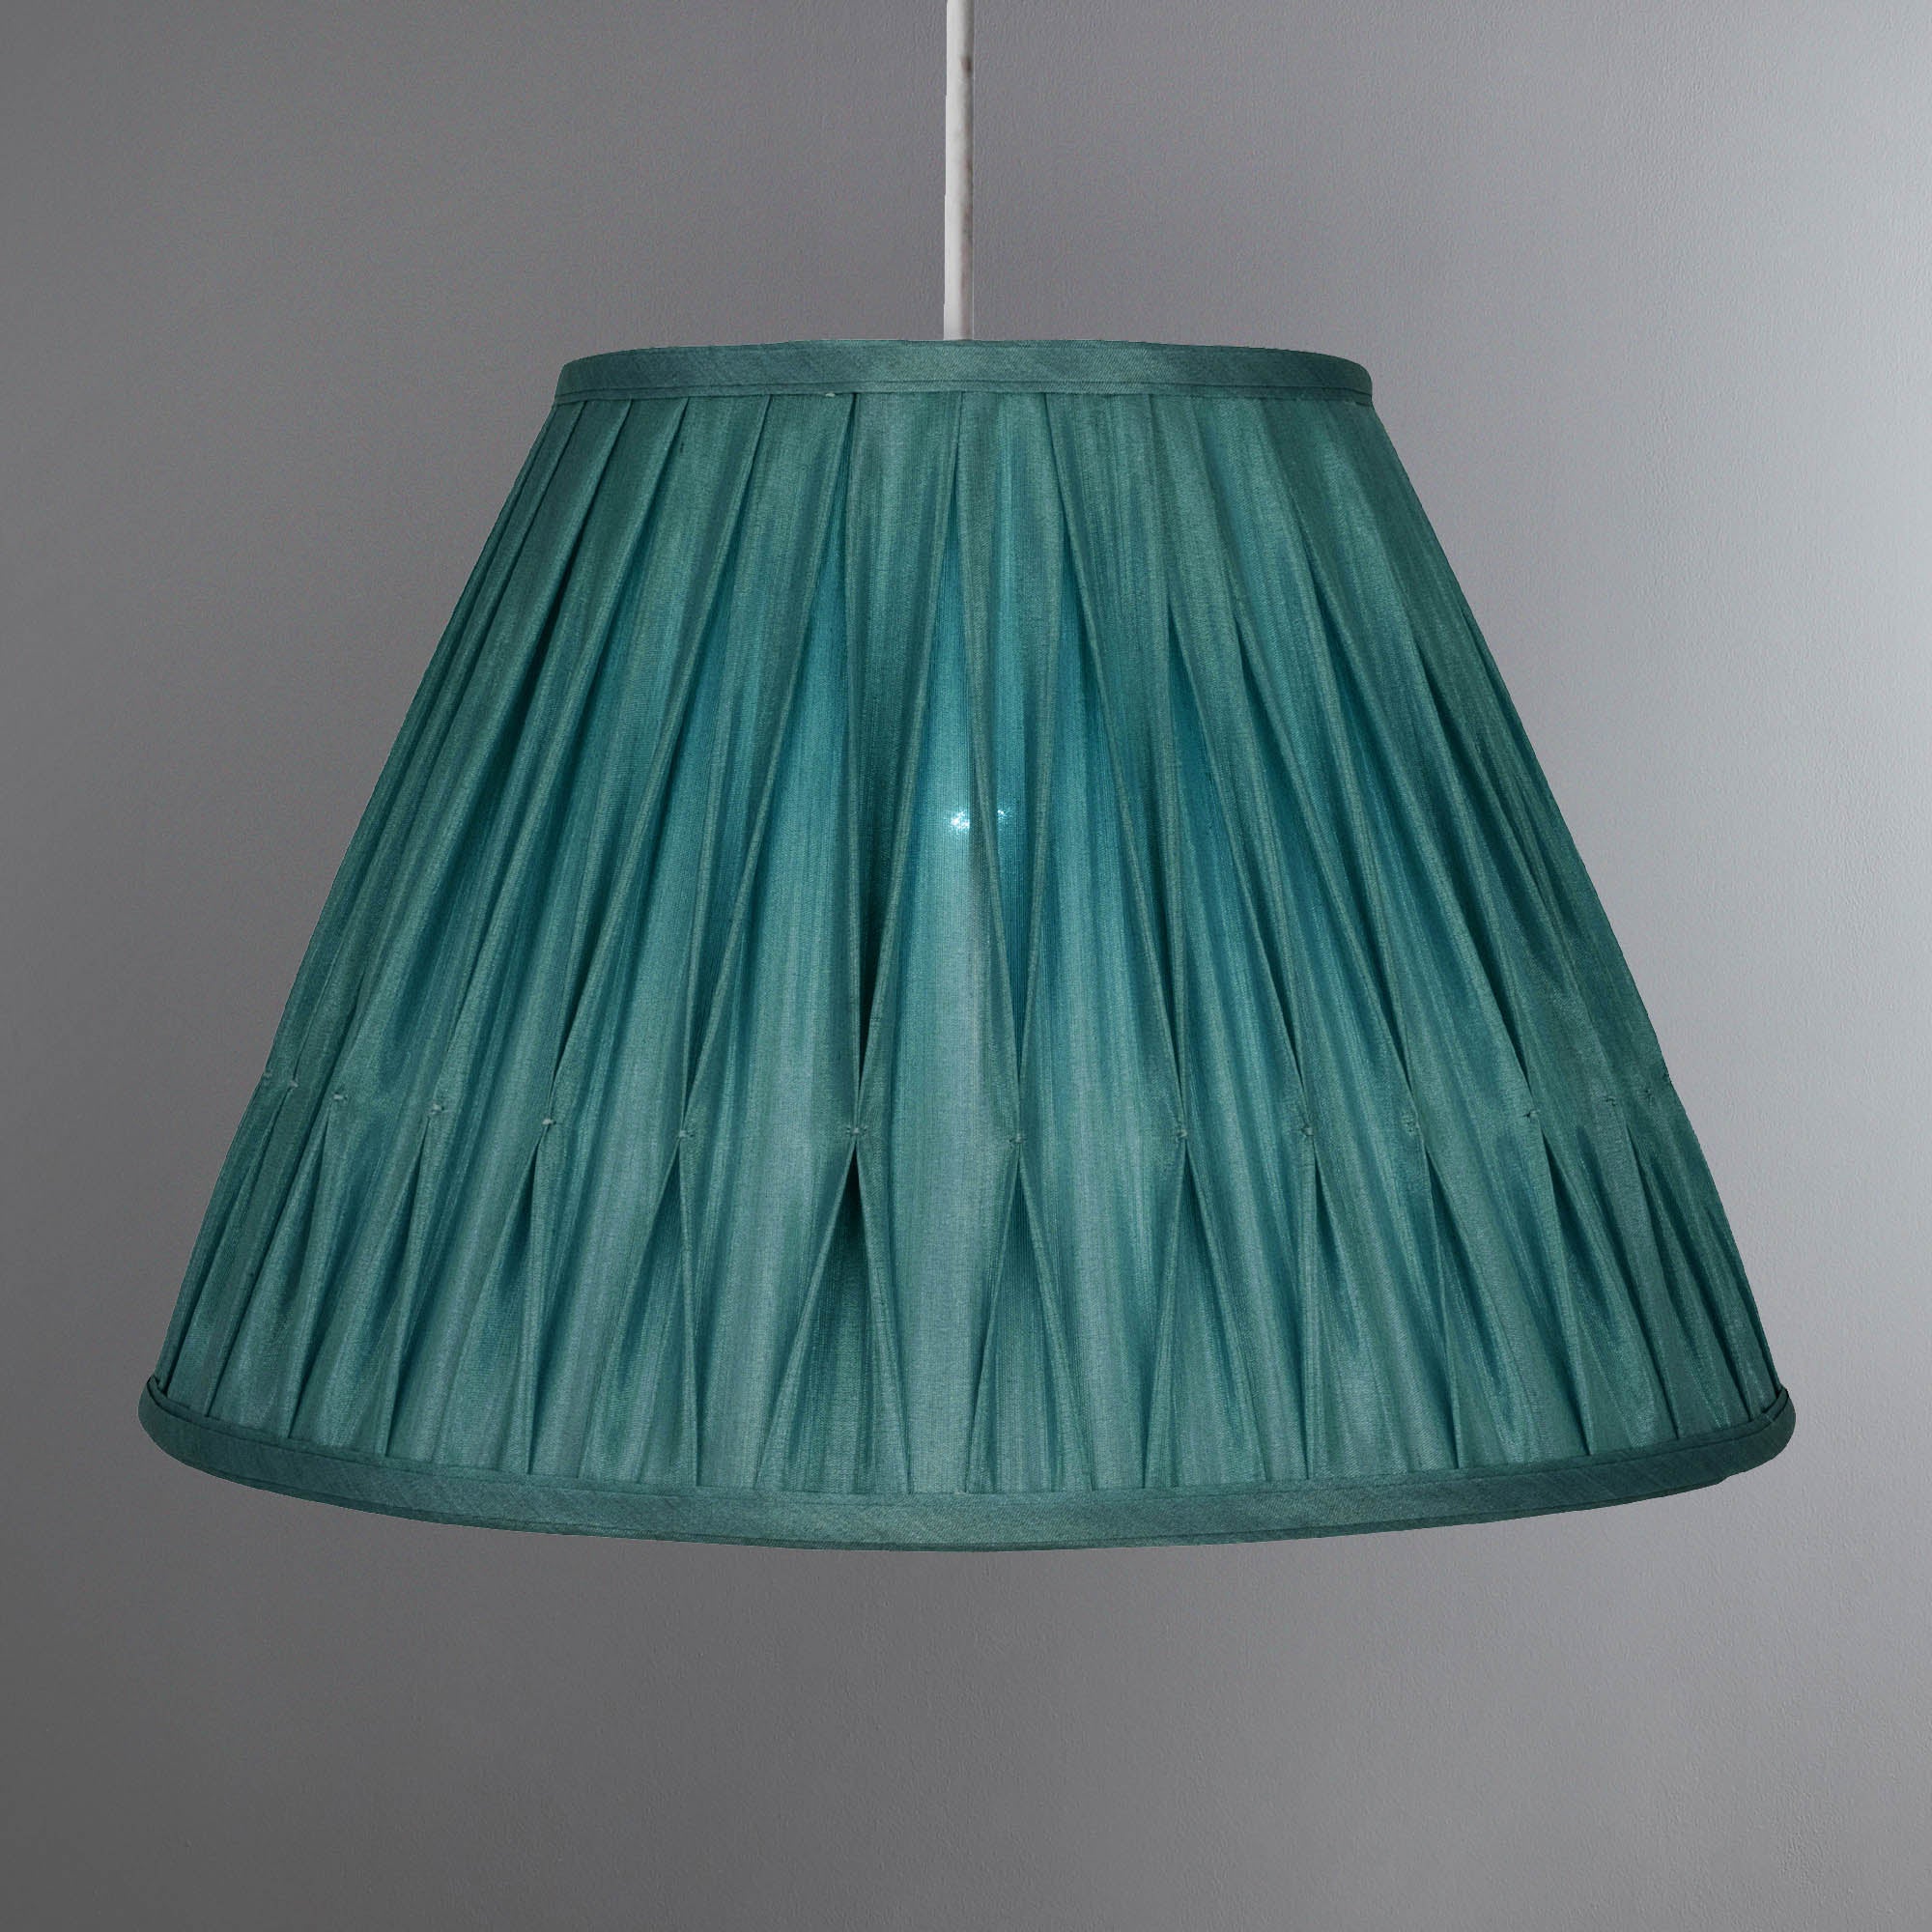 Lamp Shades | Decorative Light Shades | Dunelm